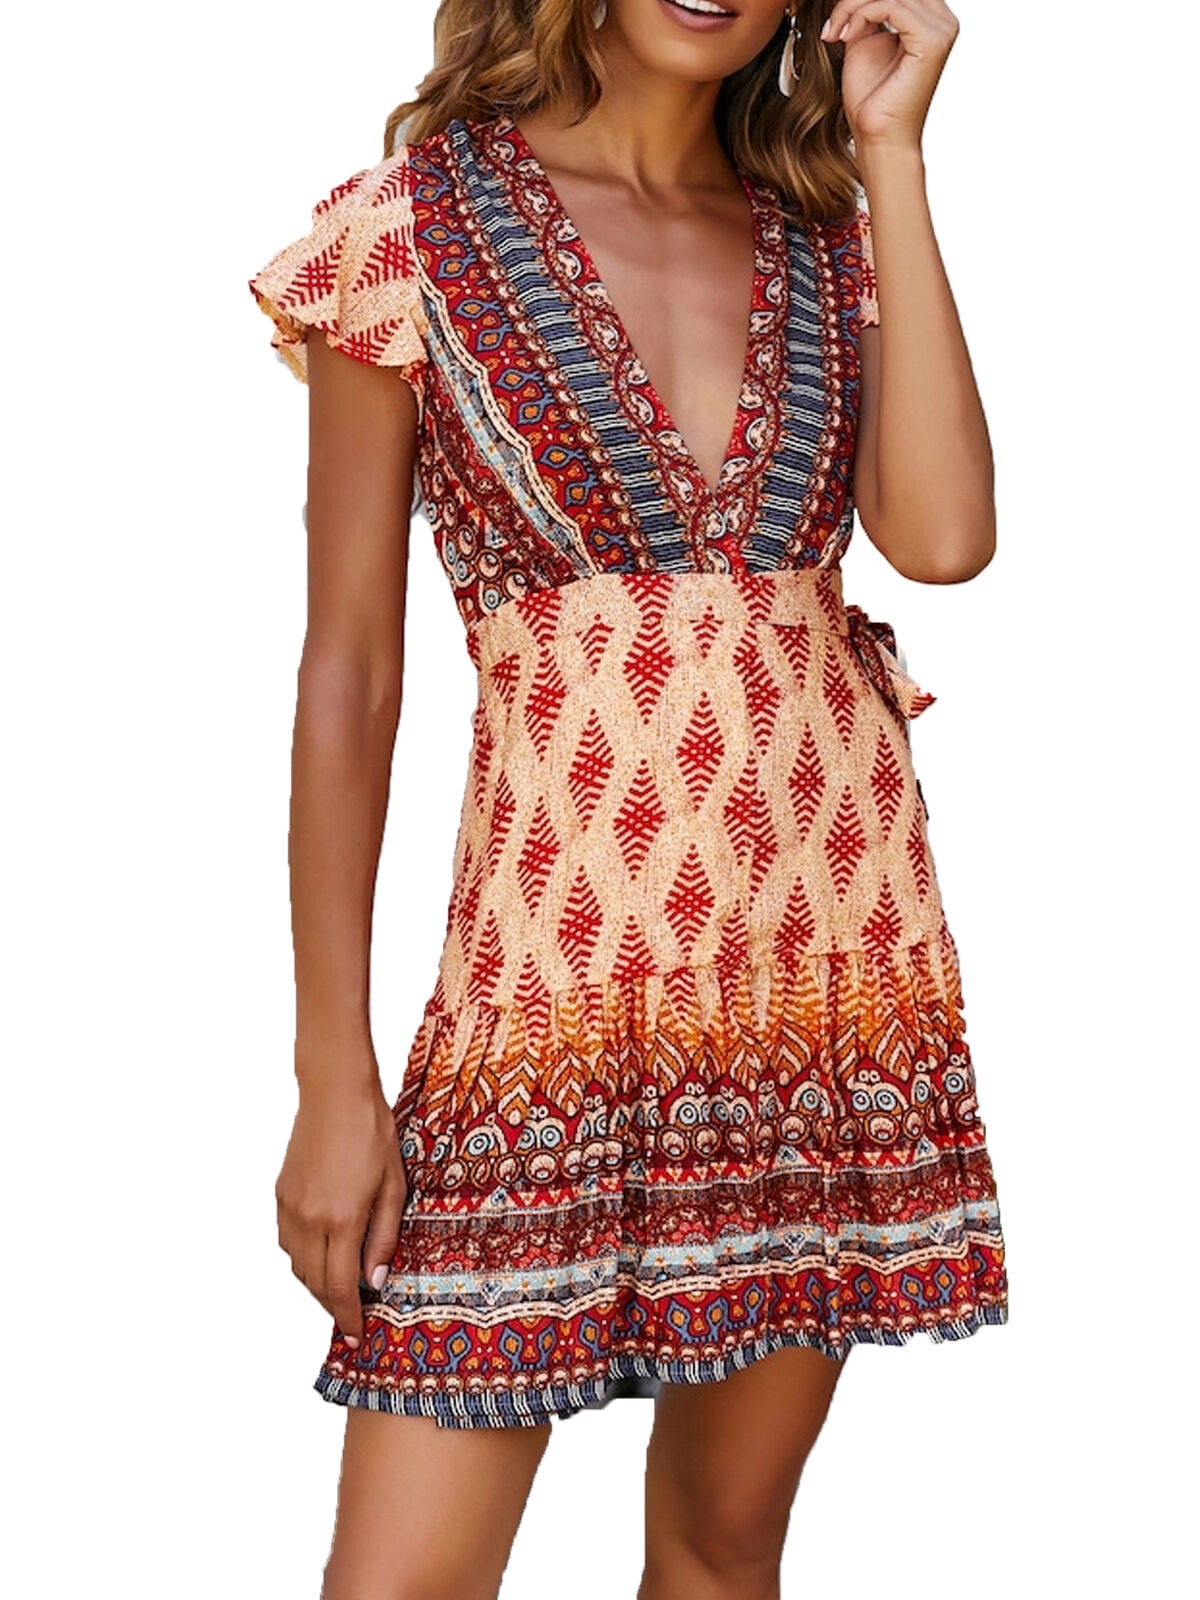 Ehpow Women V Neck Boho Floral Mini Dress Summer Short Sleeve Wrap Sash Beach Dress